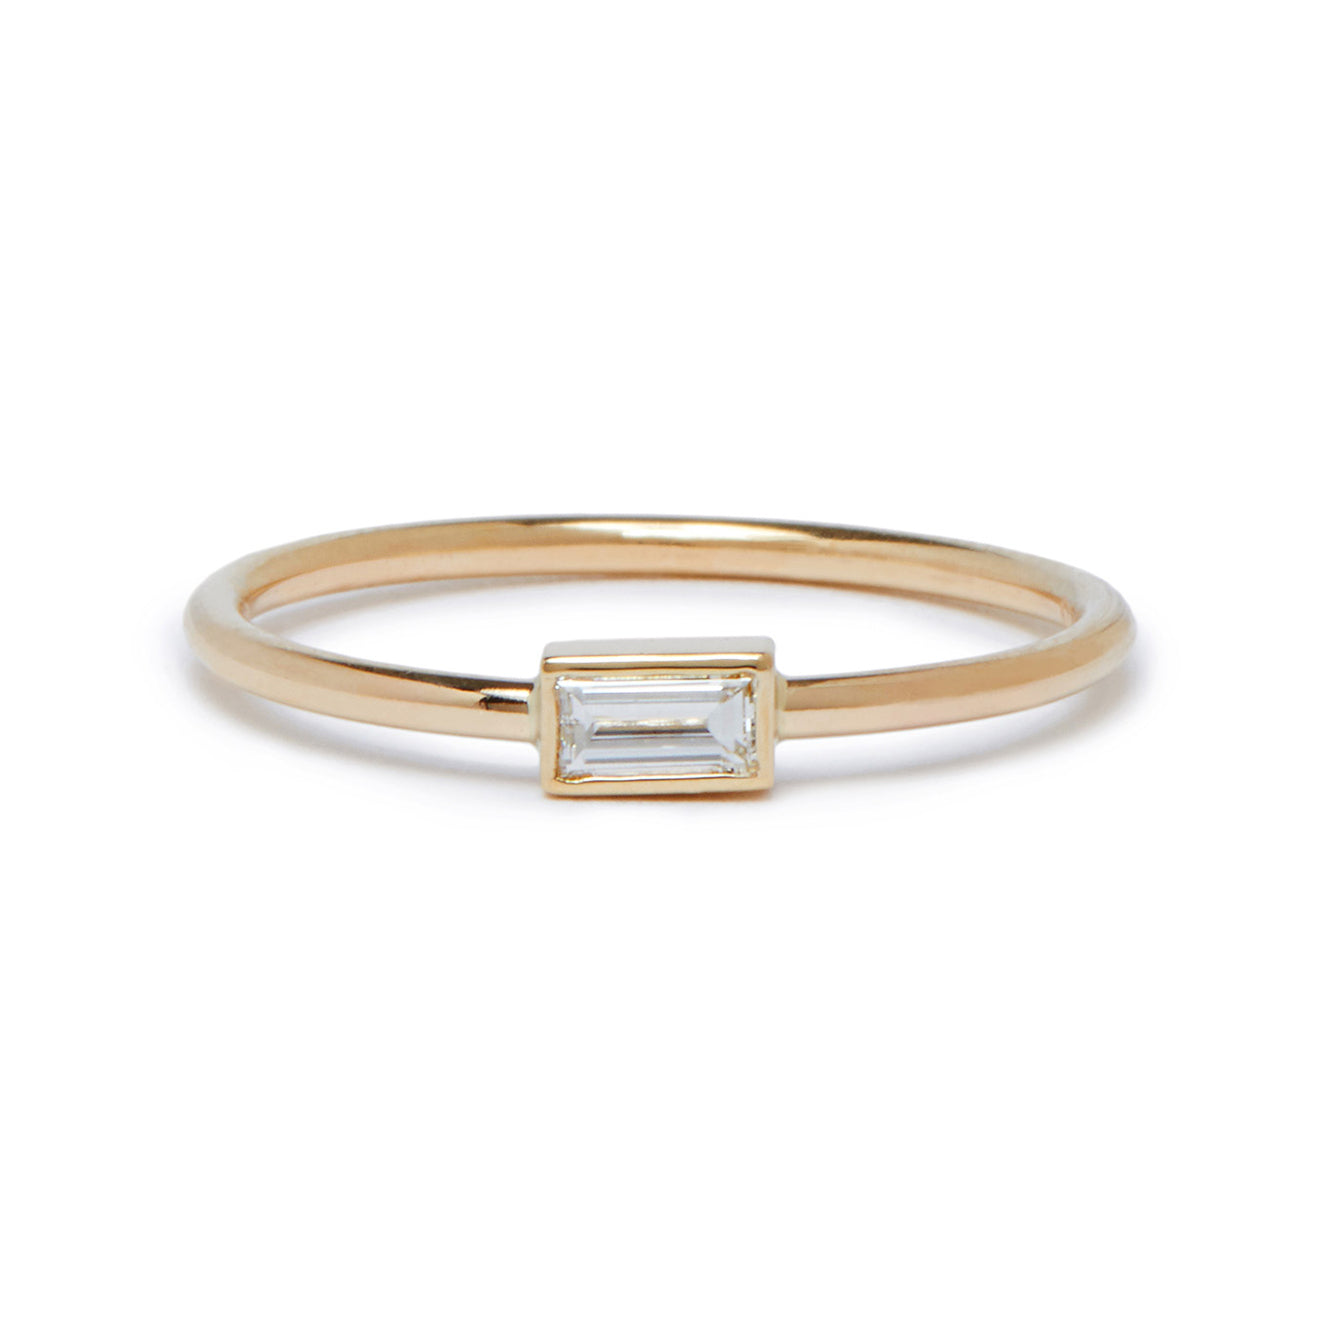 Diamond engagement ring by Macha Jewelry Brooklyn NY